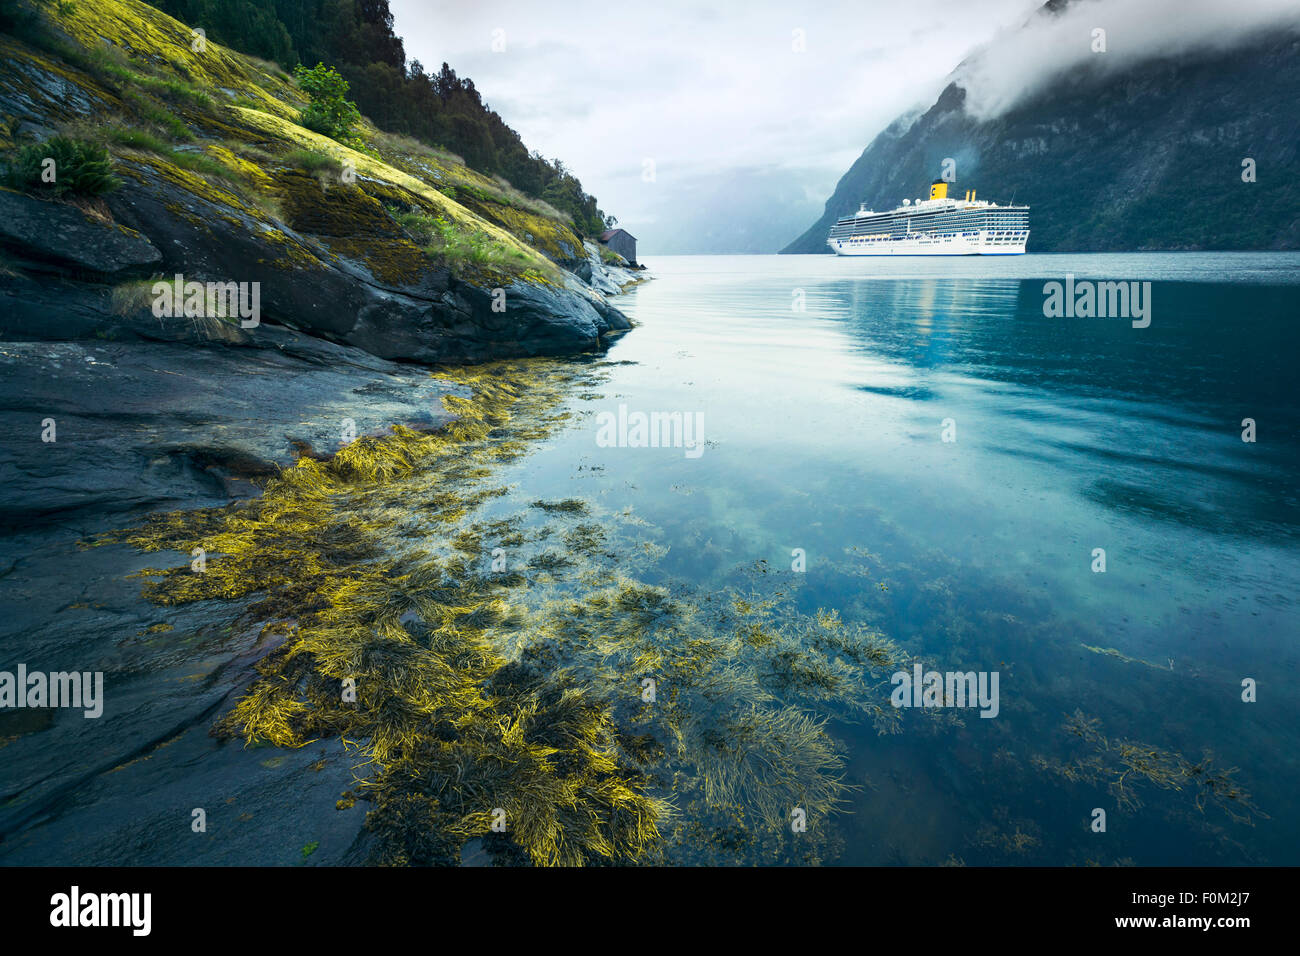 Cruise ship in the Sunnylvsfjord, Norway Stock Photo